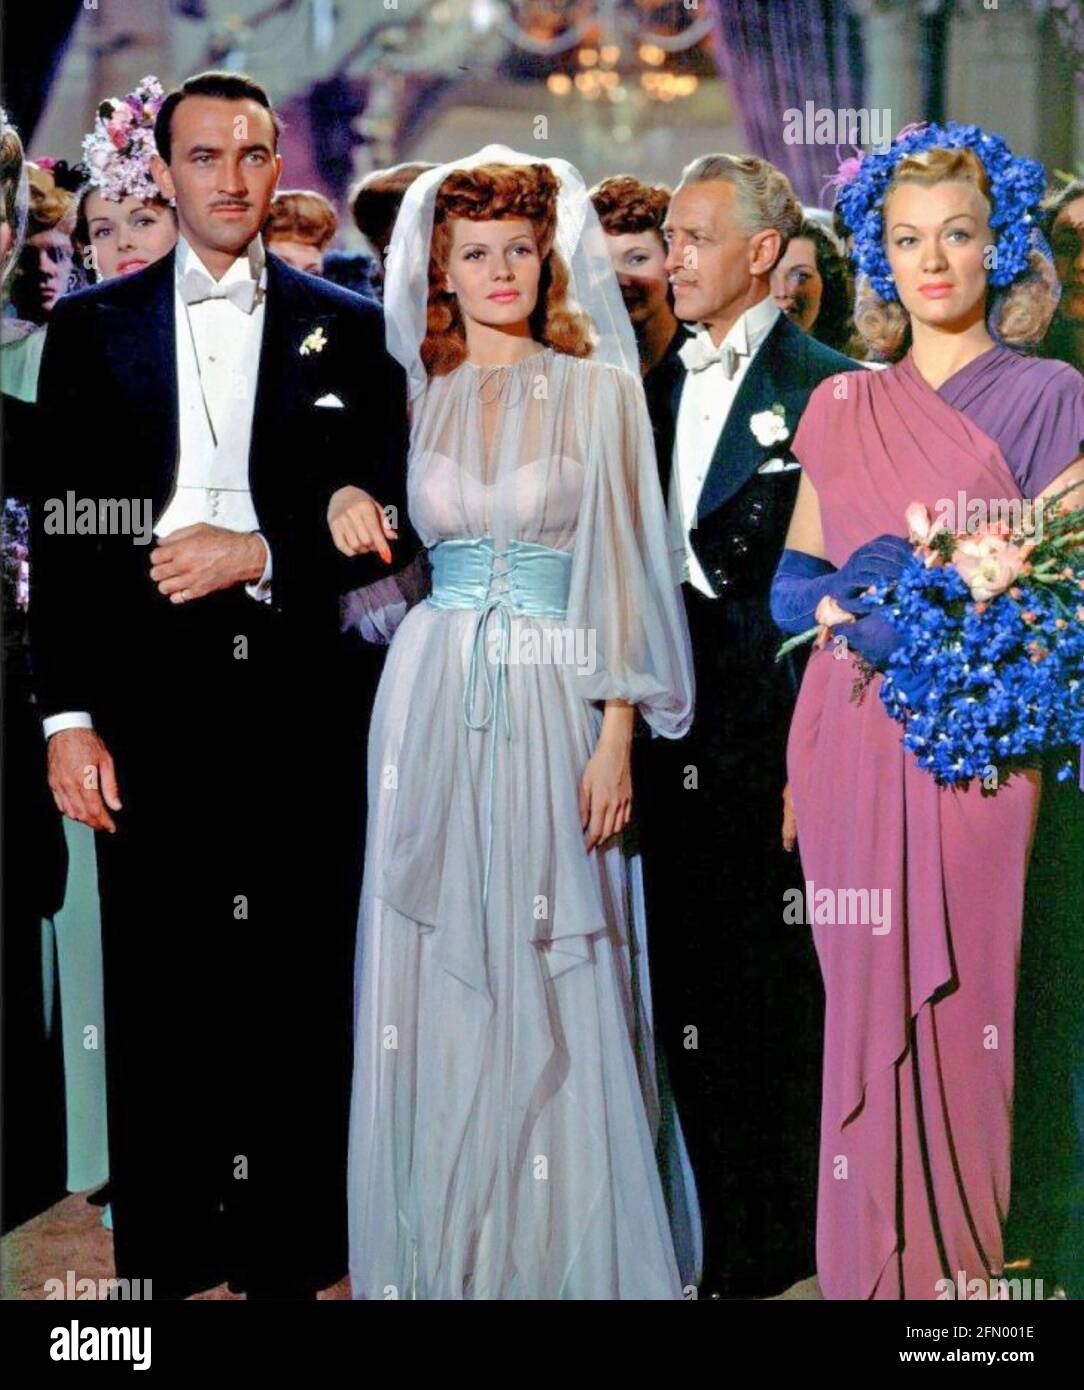 COVER GIRL 1944 Columbia Pictures film con da sinistra: Lee Bowman, Rita Hayworth, otto Kruger, Eve Arden. Foto Stock